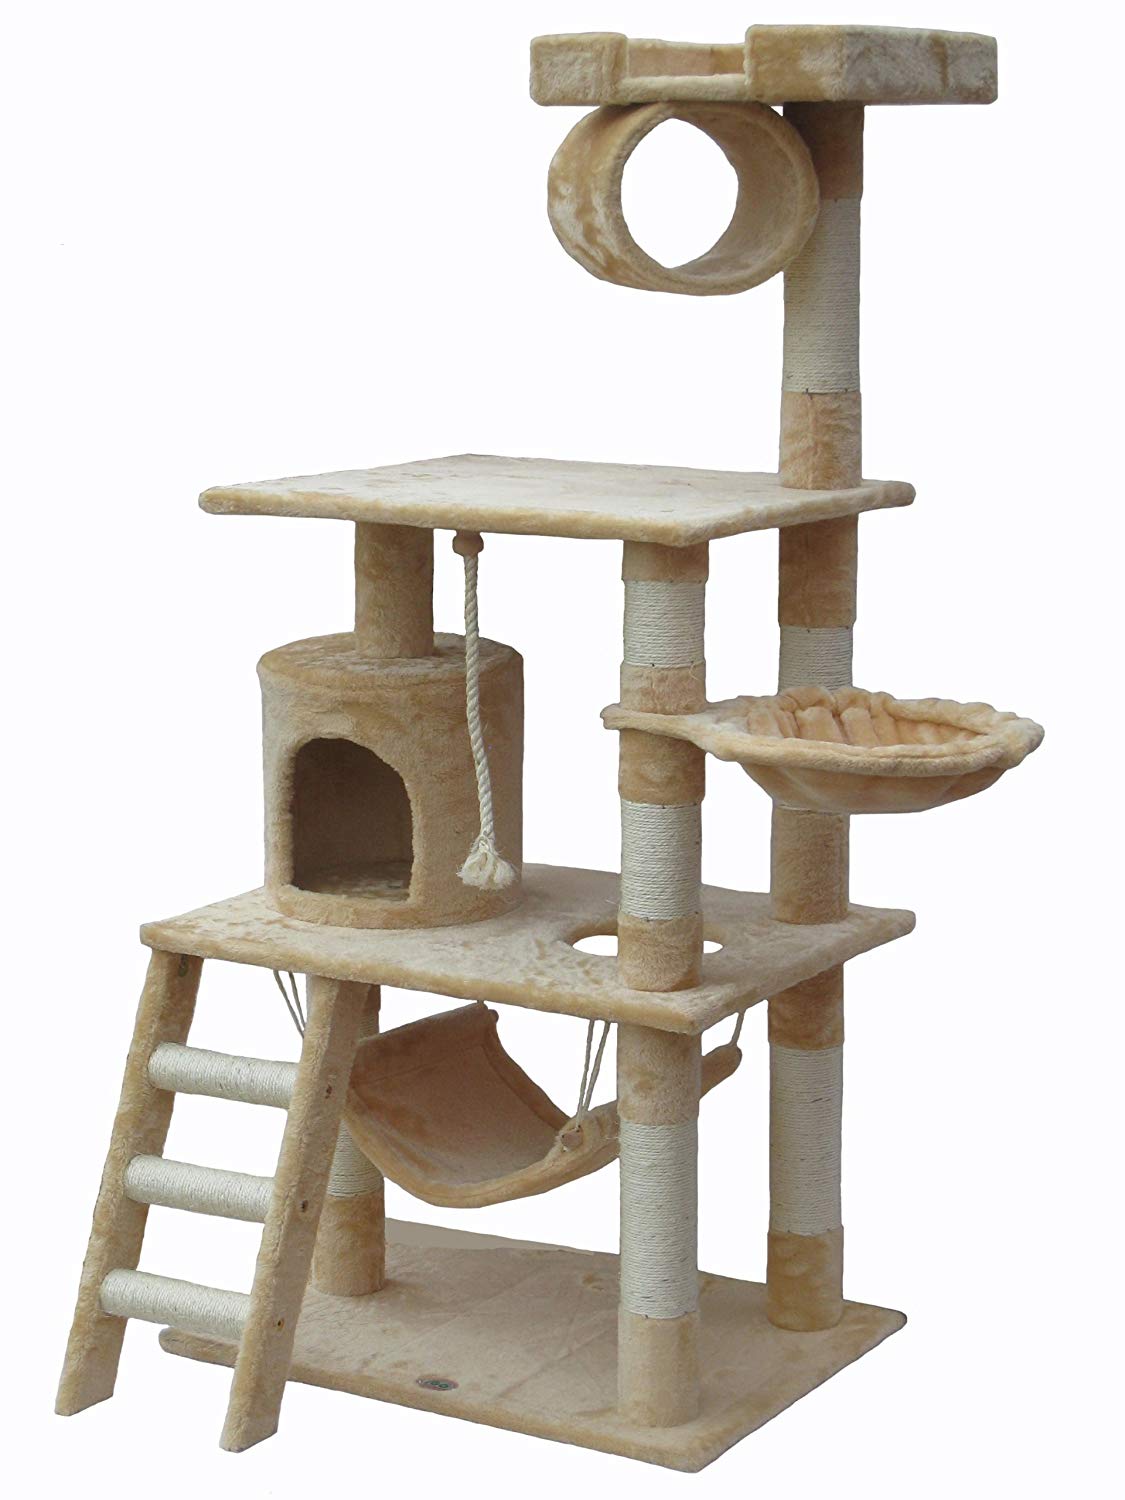 62 inch Go Pet Club cat tree with ladder, hammock, condo box and sky tube.